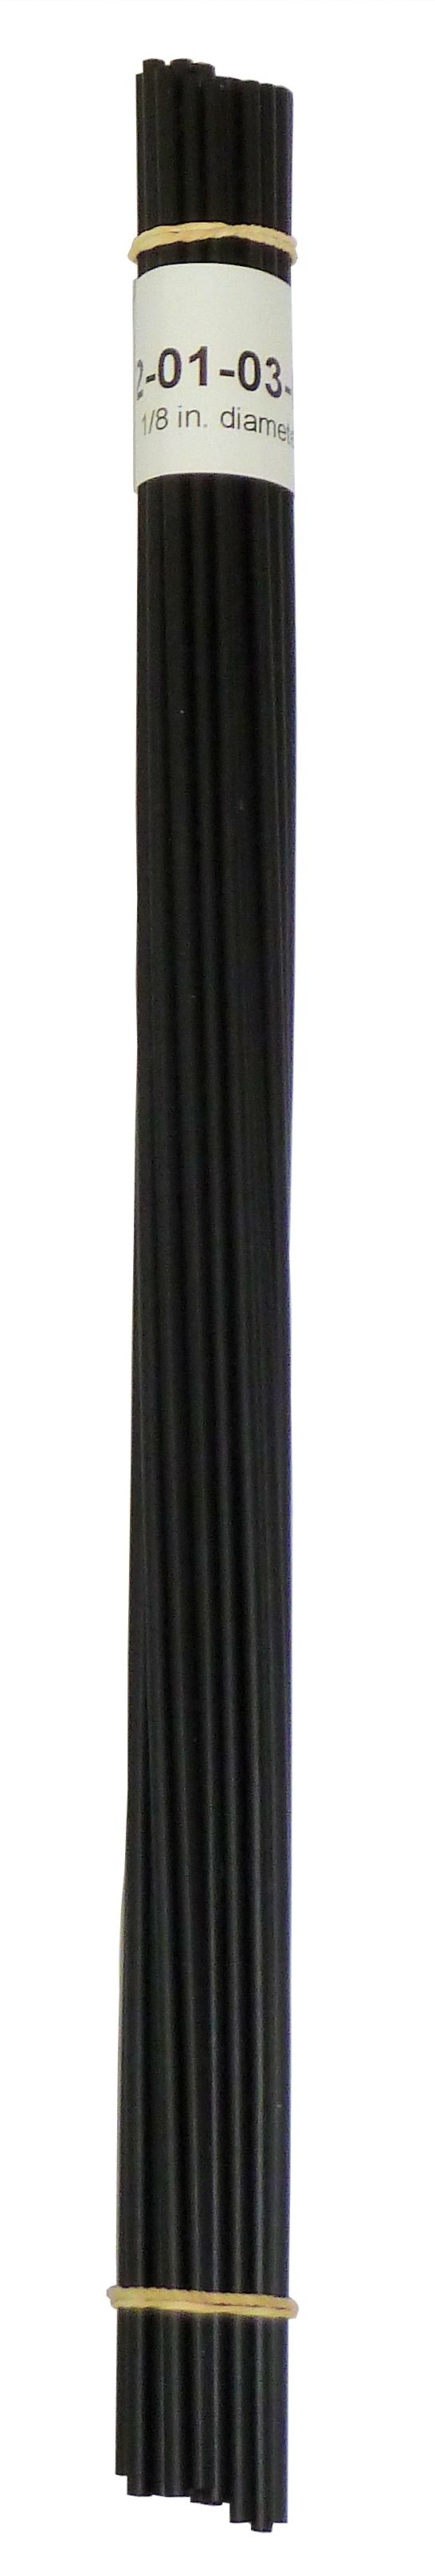 30 ft 3/16 diameter Black PP+GF15 Rod 